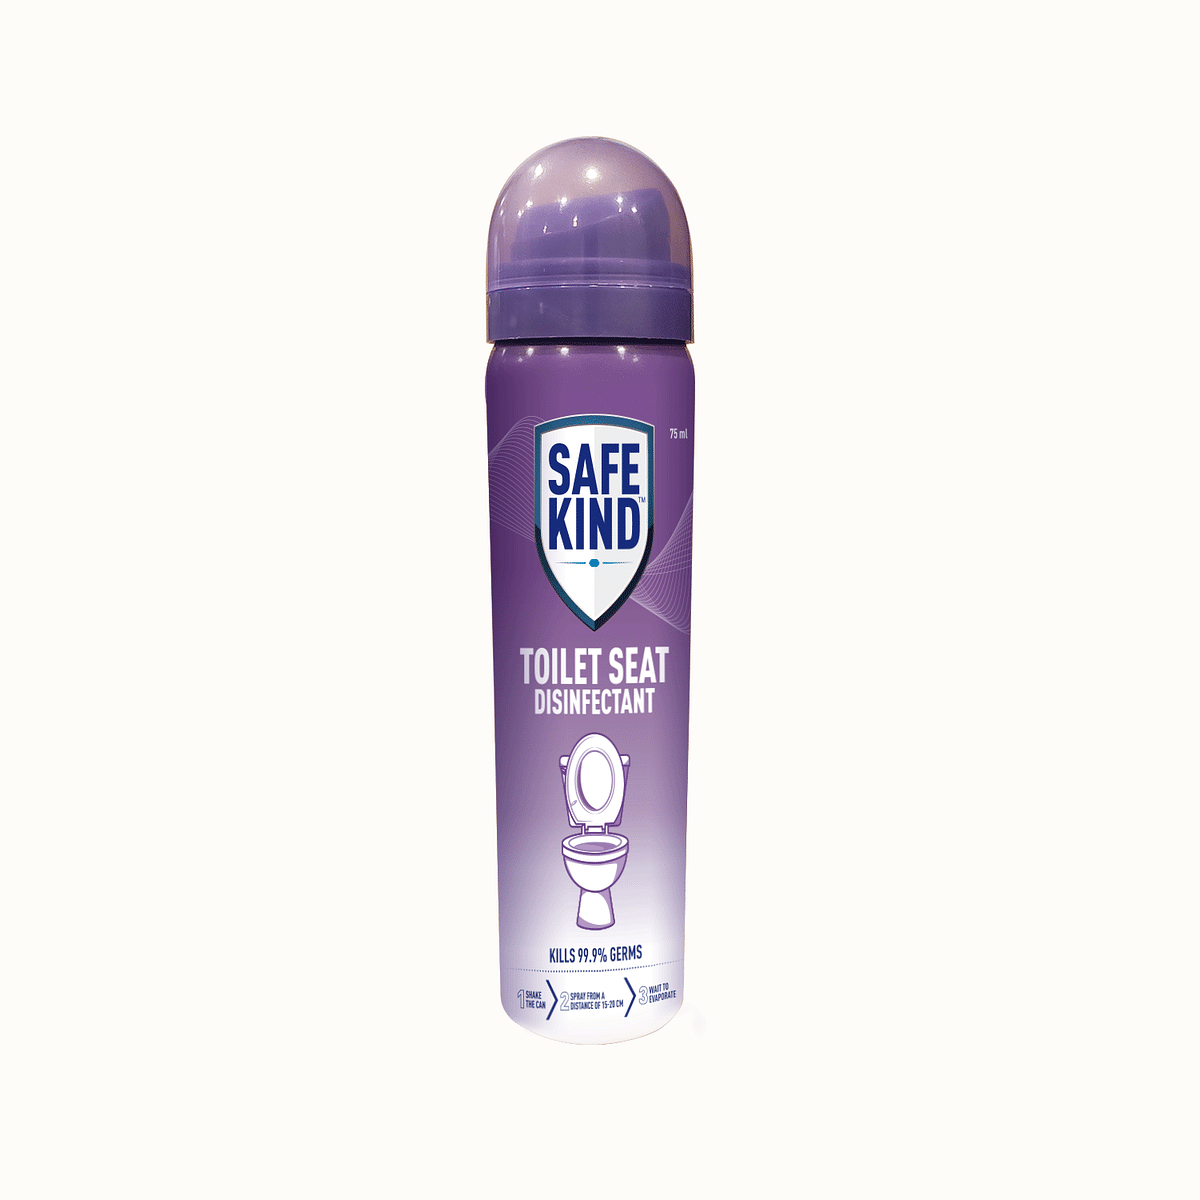 Safekind toilet seat disinfectant spray